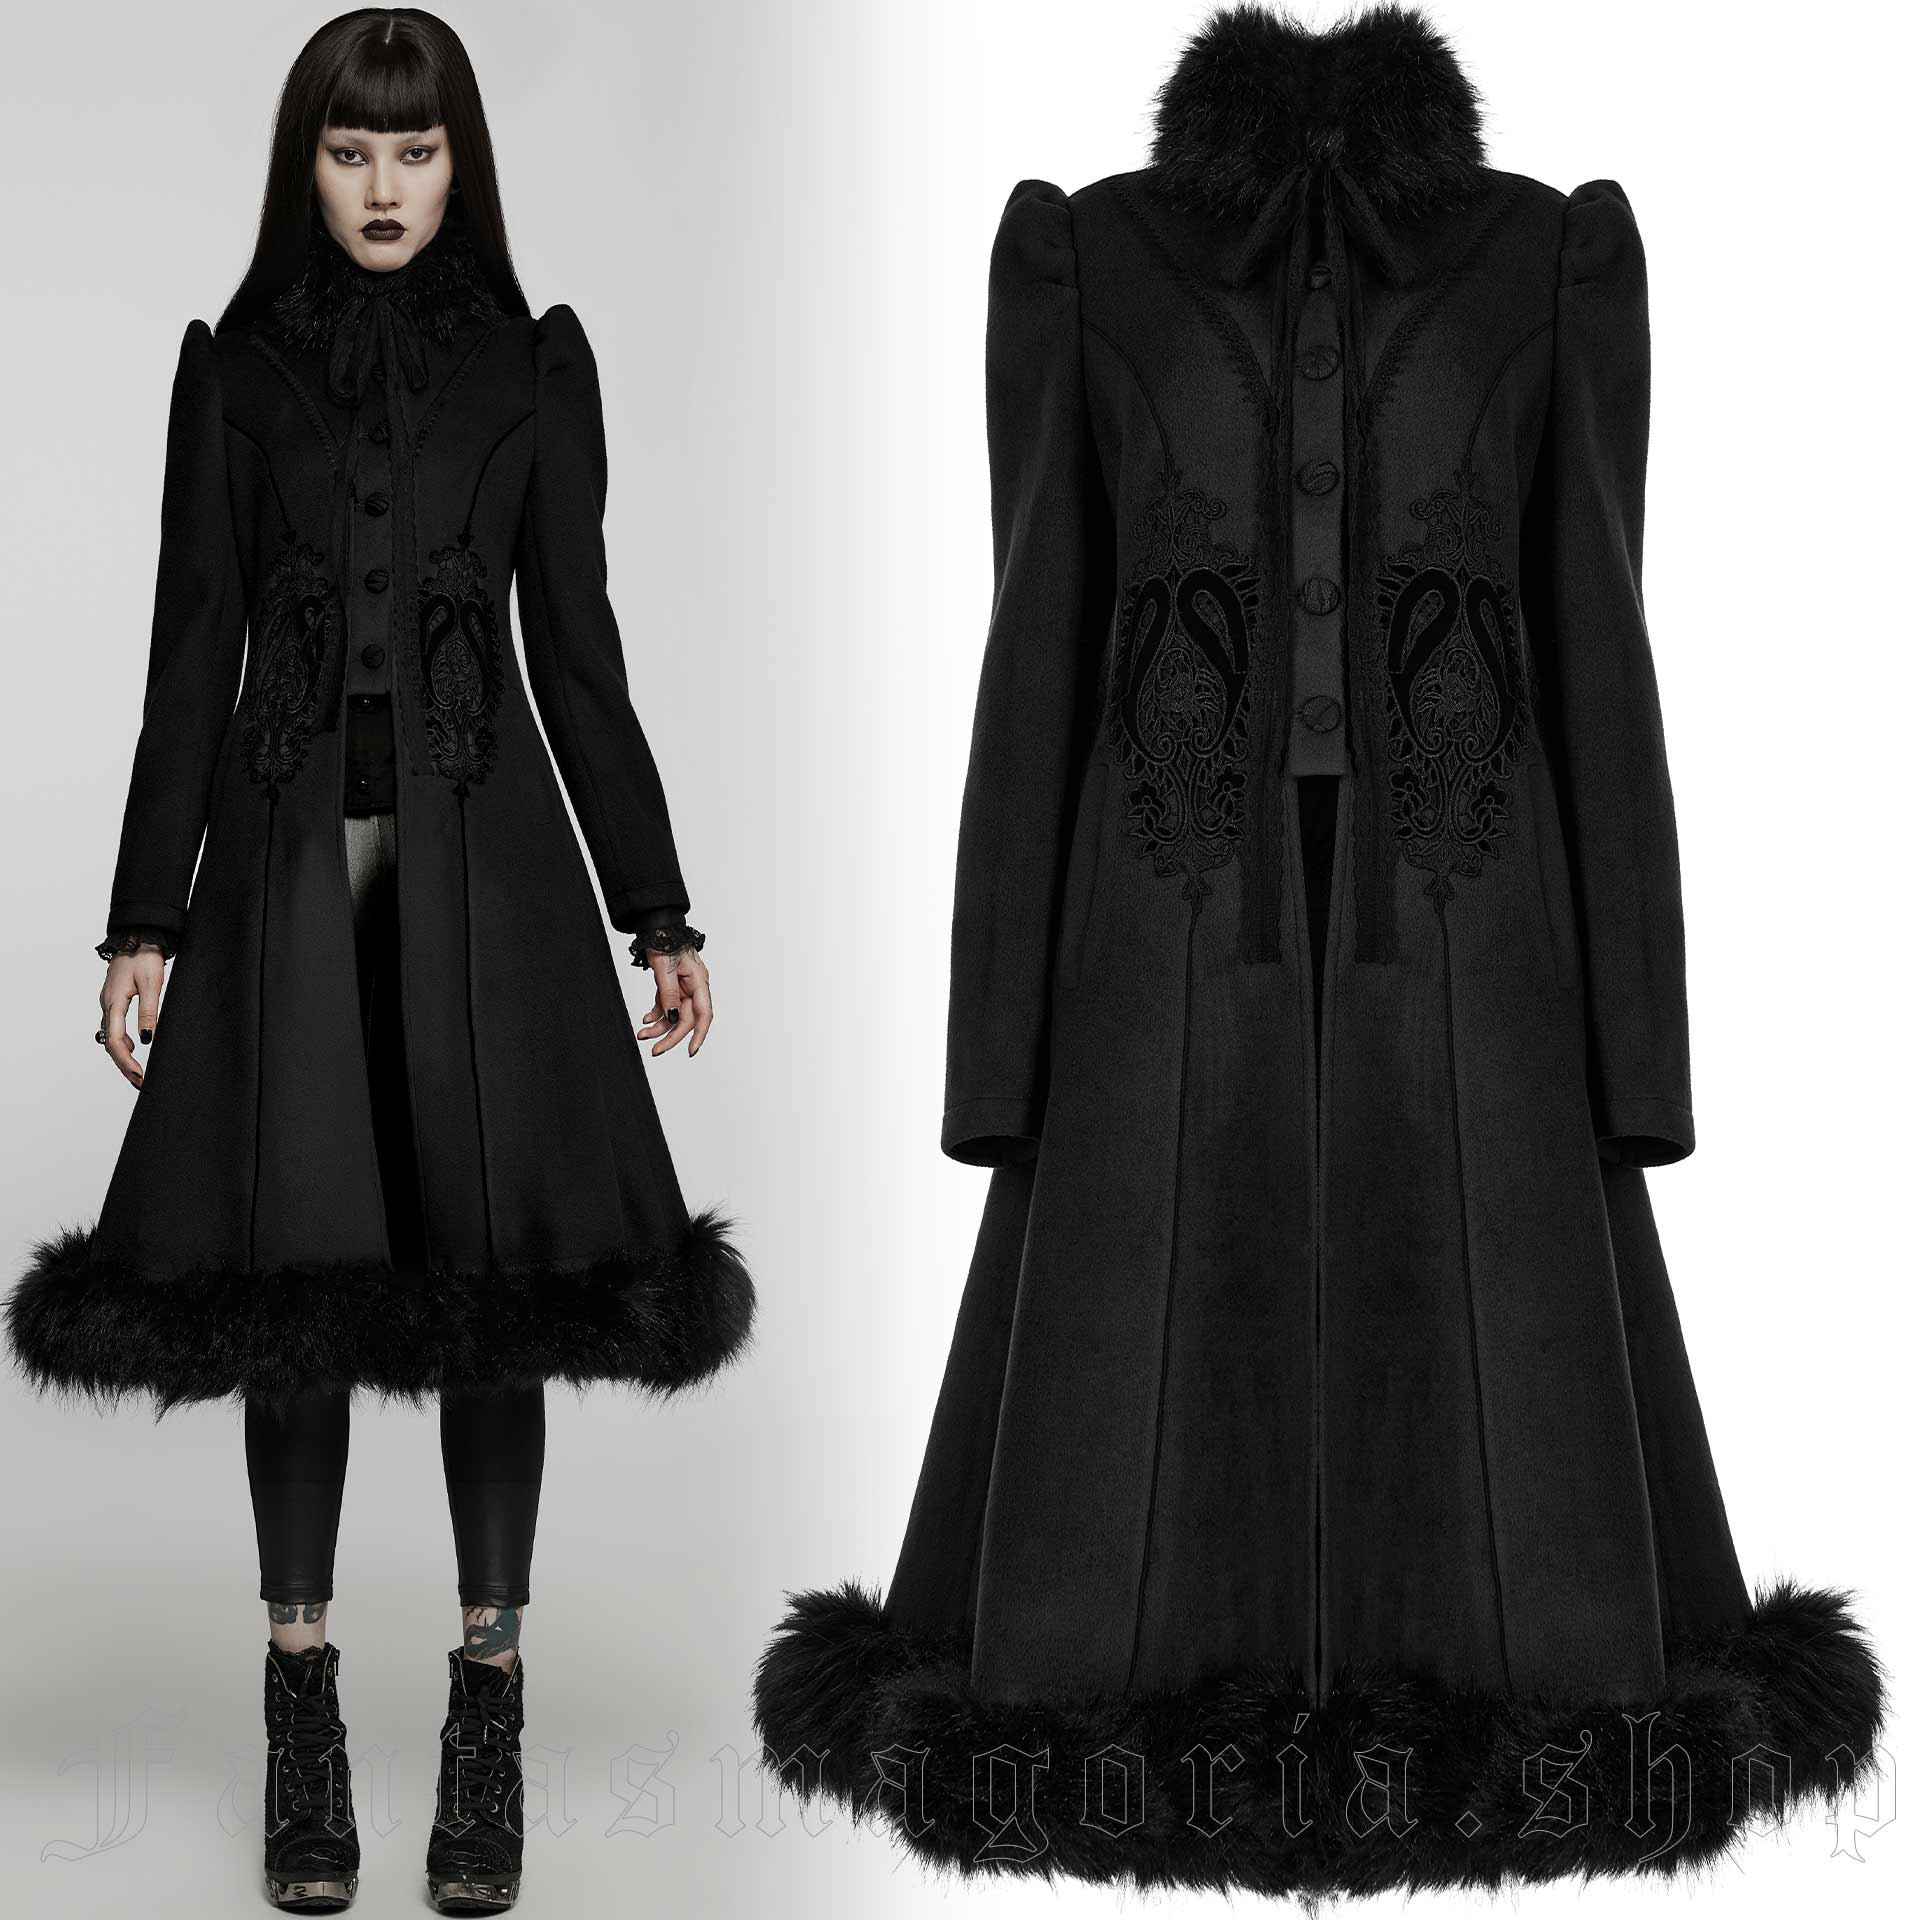 Women`s Victorian Gothic black coat.